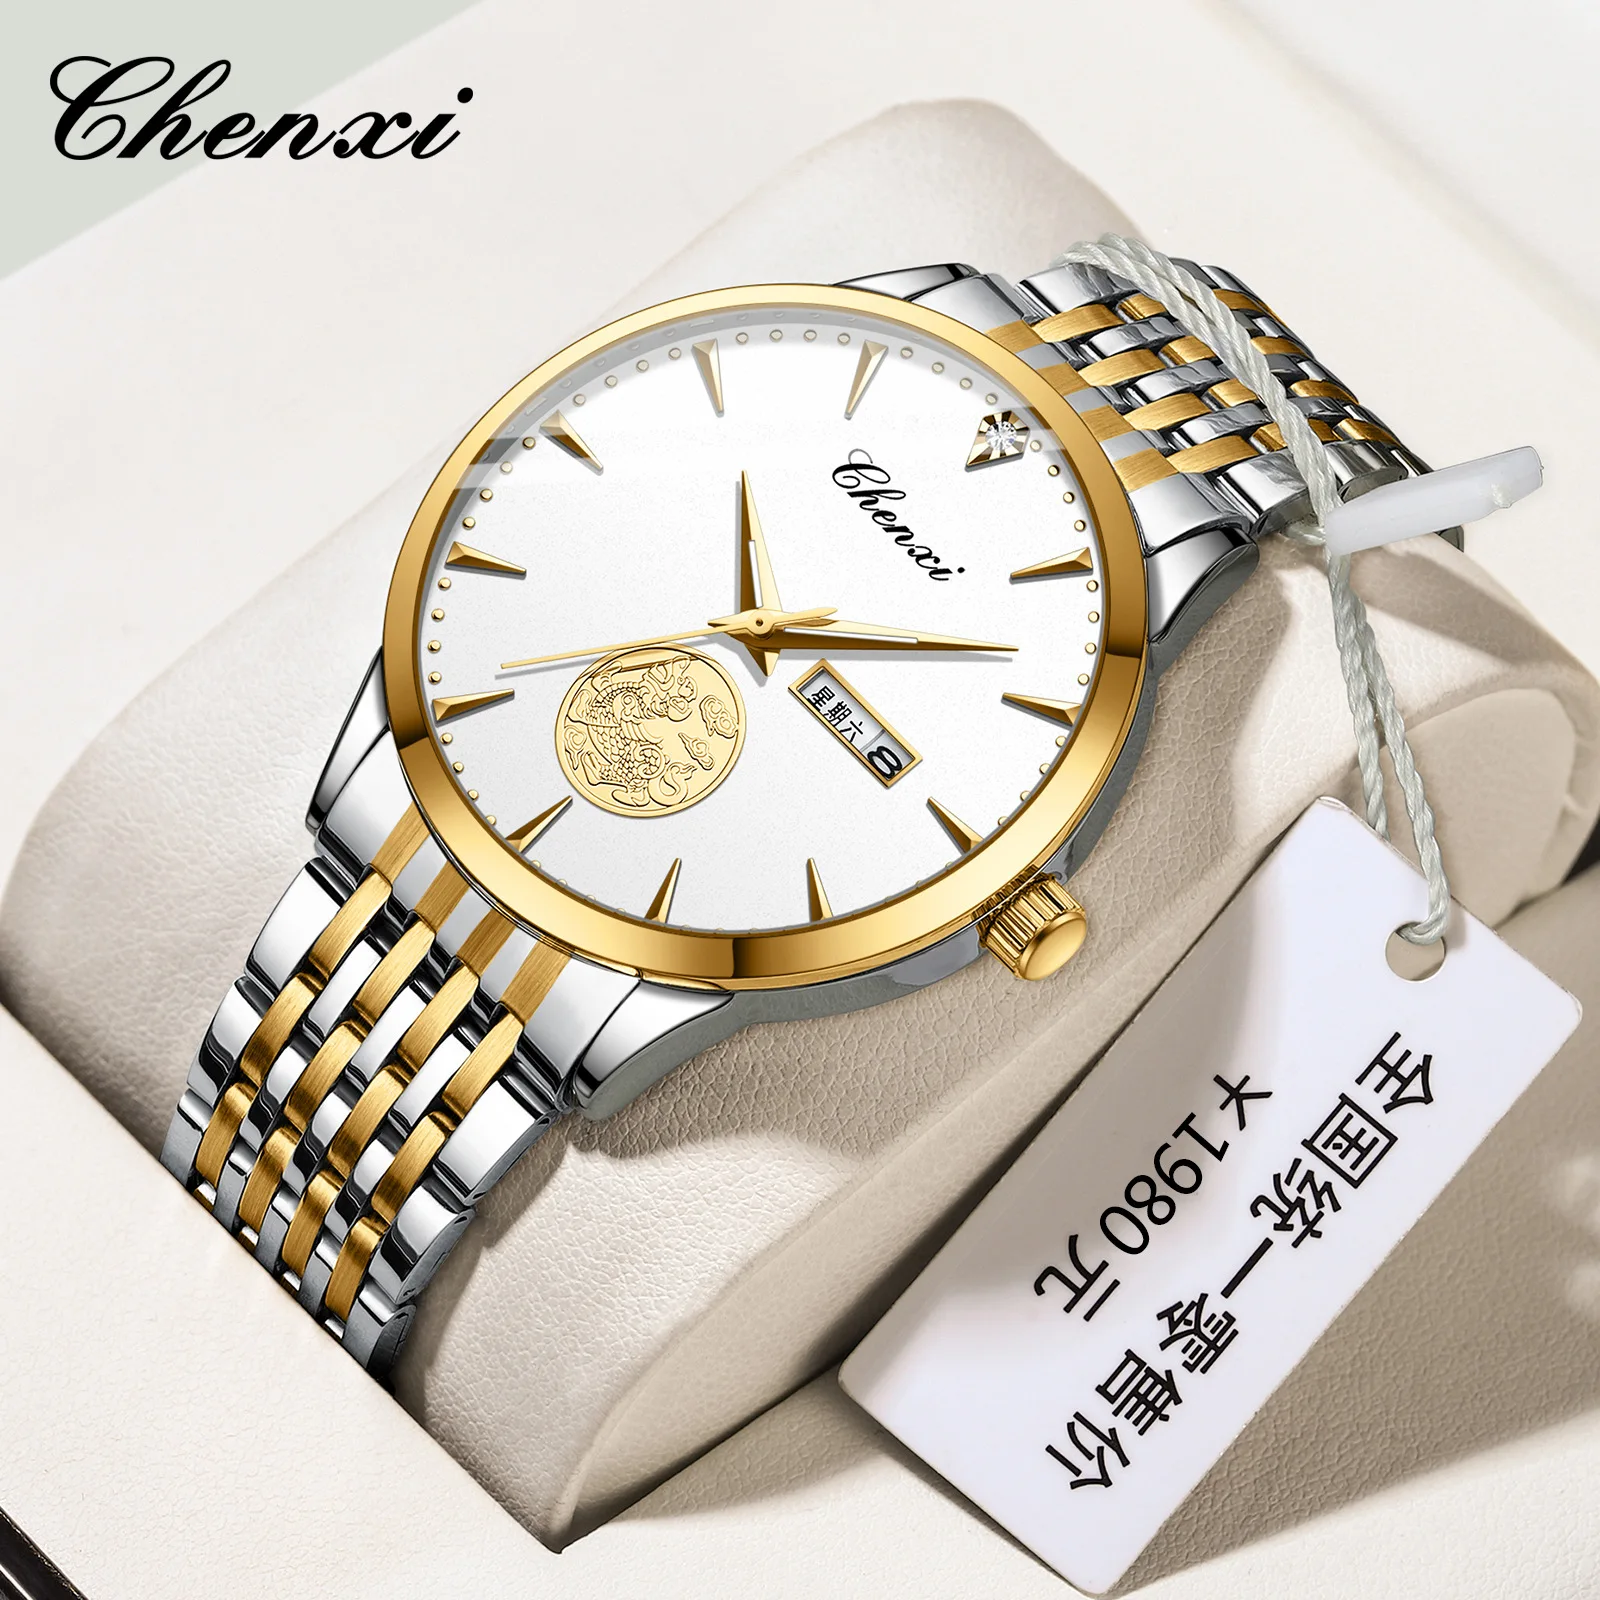 

CHENXI 82122 Men's Quartz Watch Luxury Luminous Gold Dragon Business Date Analog Display Stainless Steel Wrist Watch for Male